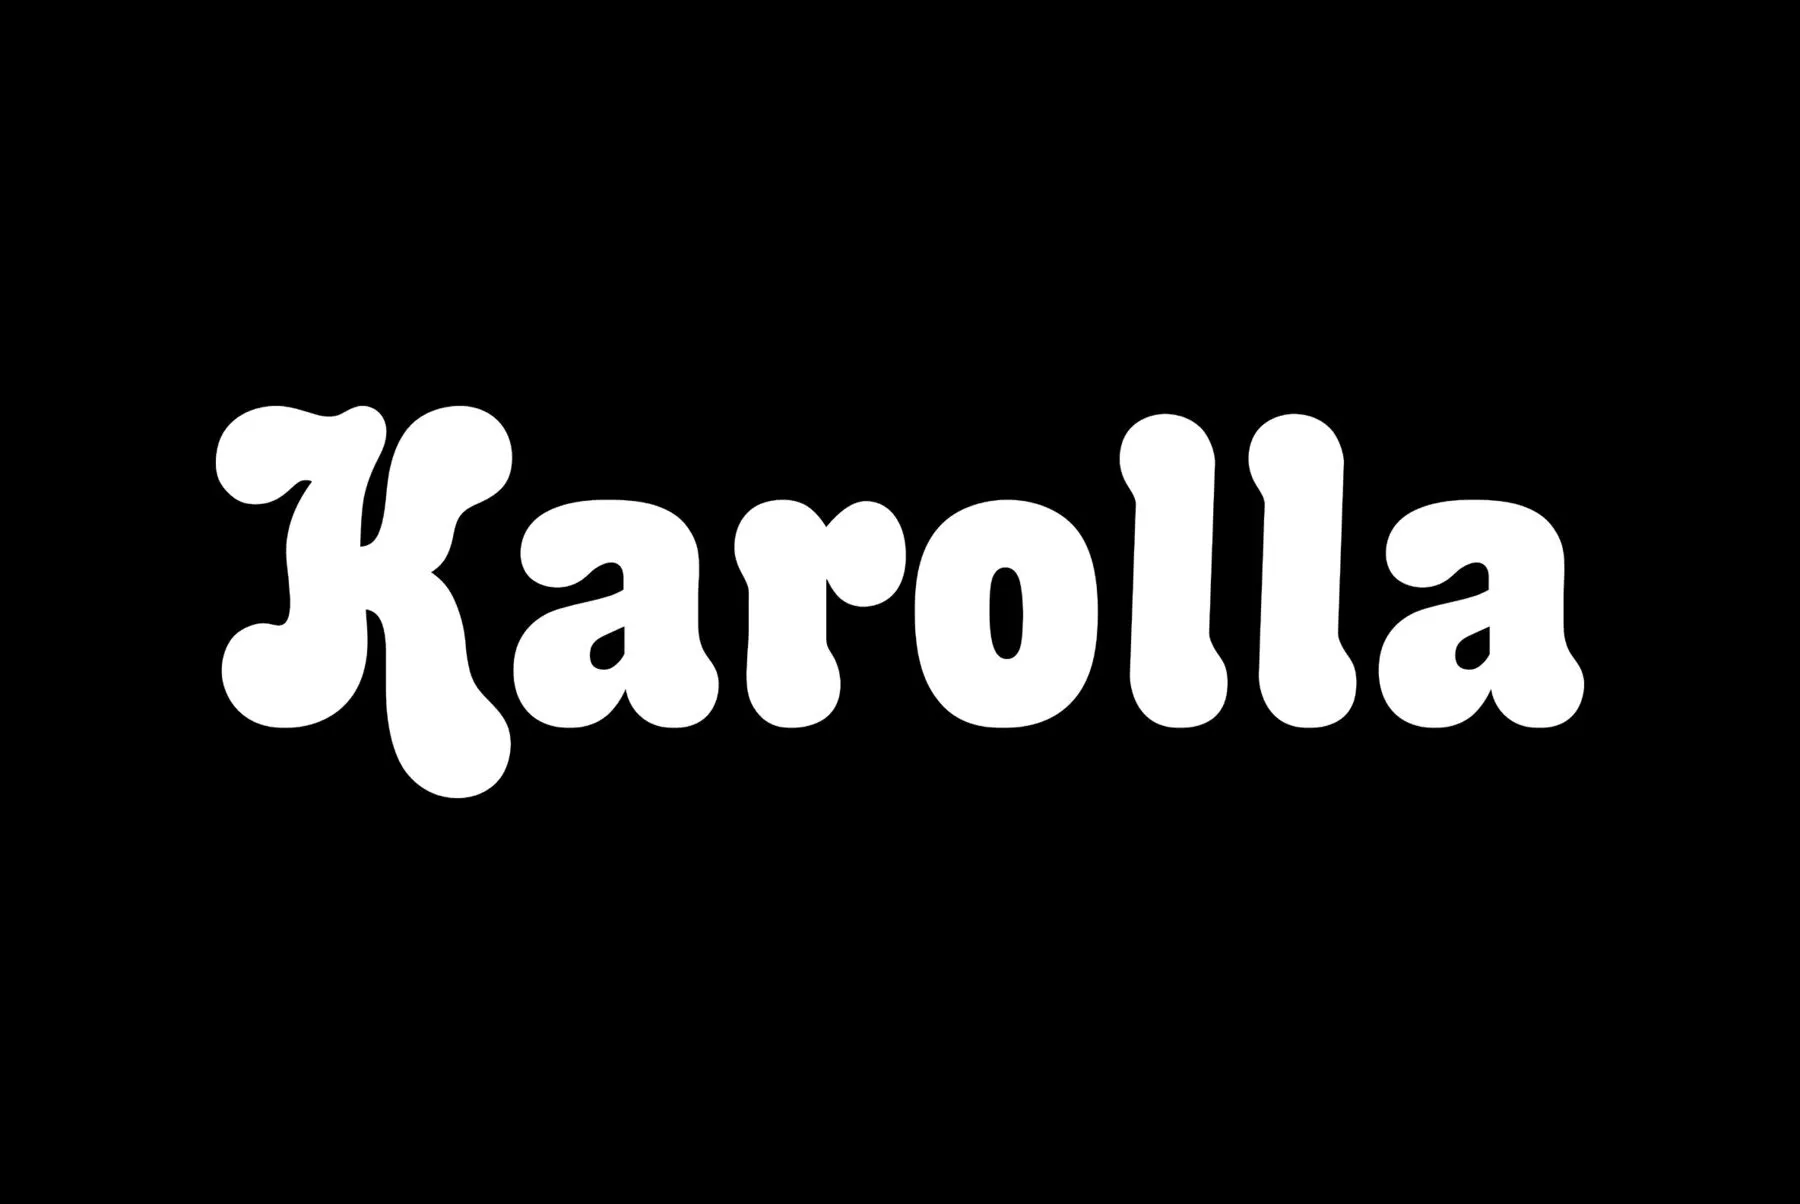 Karolla